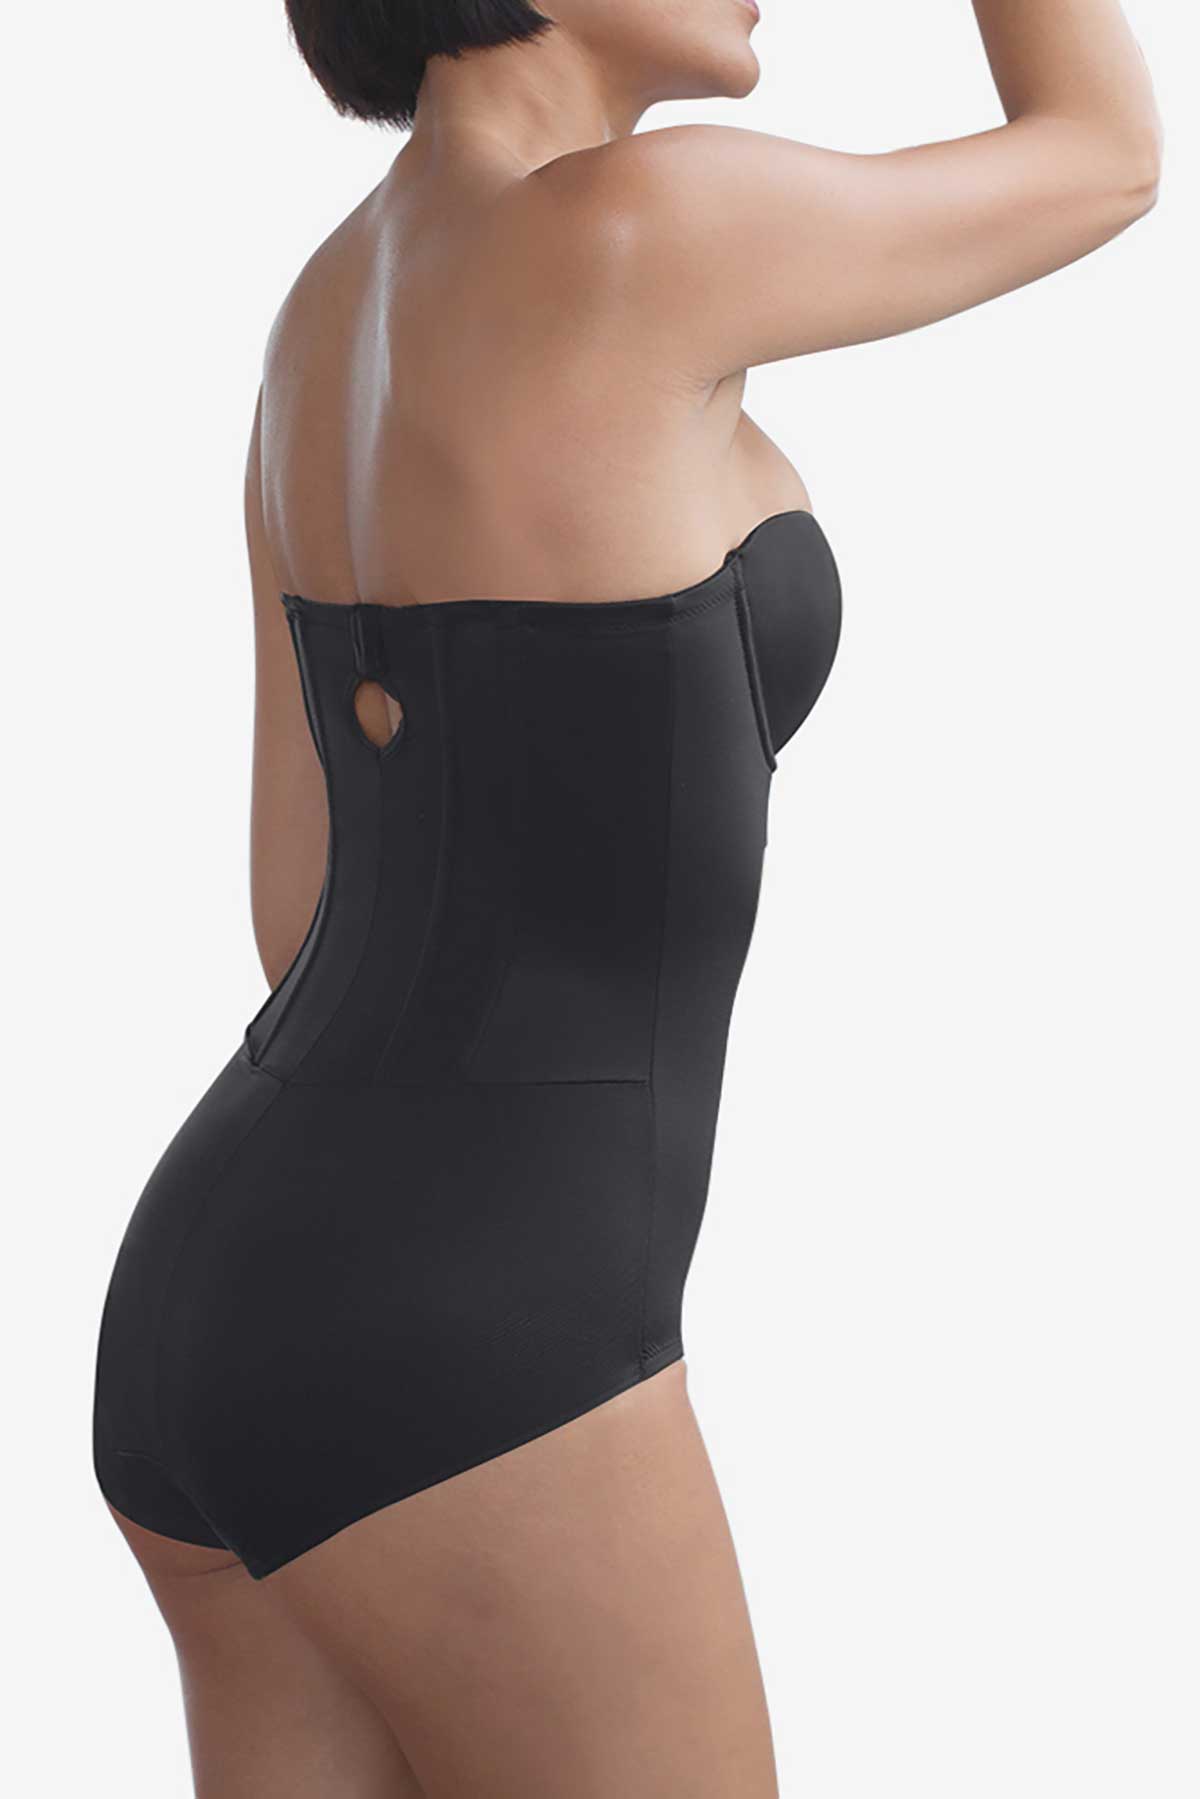 Zeecaro Strapless Bodysuit for Tummy Control Women's Shapewear